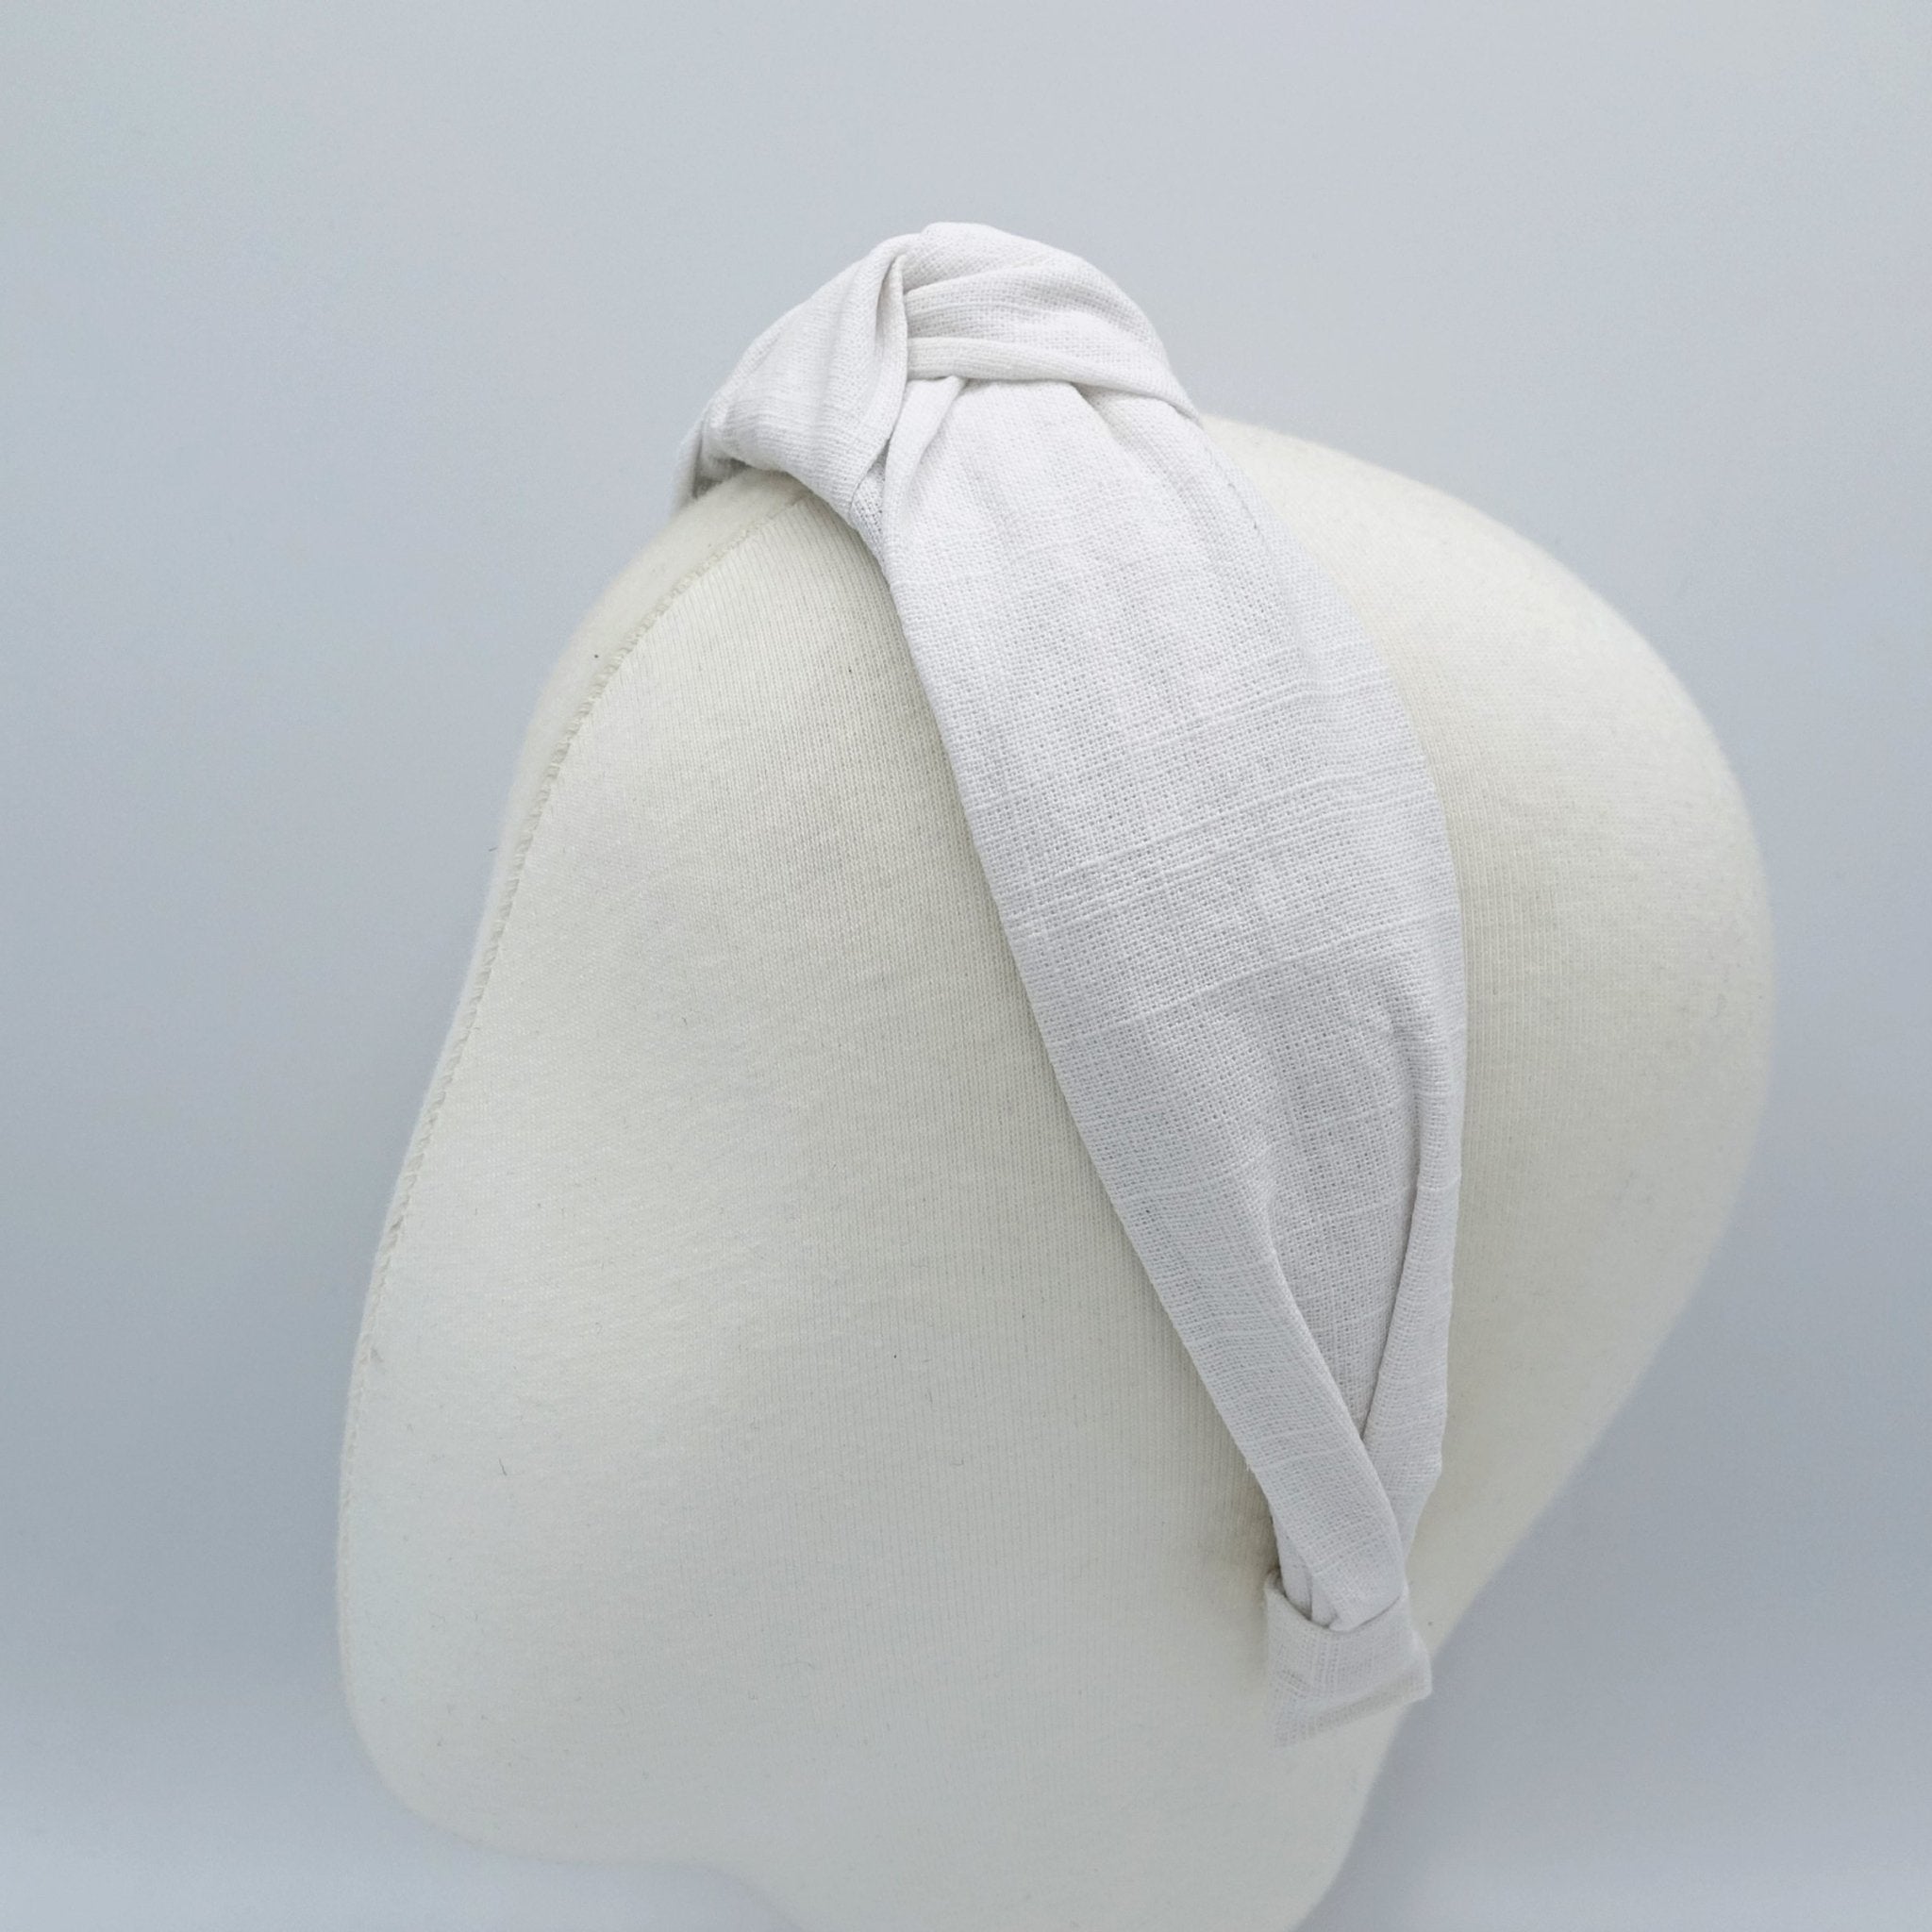 veryshine.com Headband White linen blend fabric top knot headband basic style hairband women hair accessory